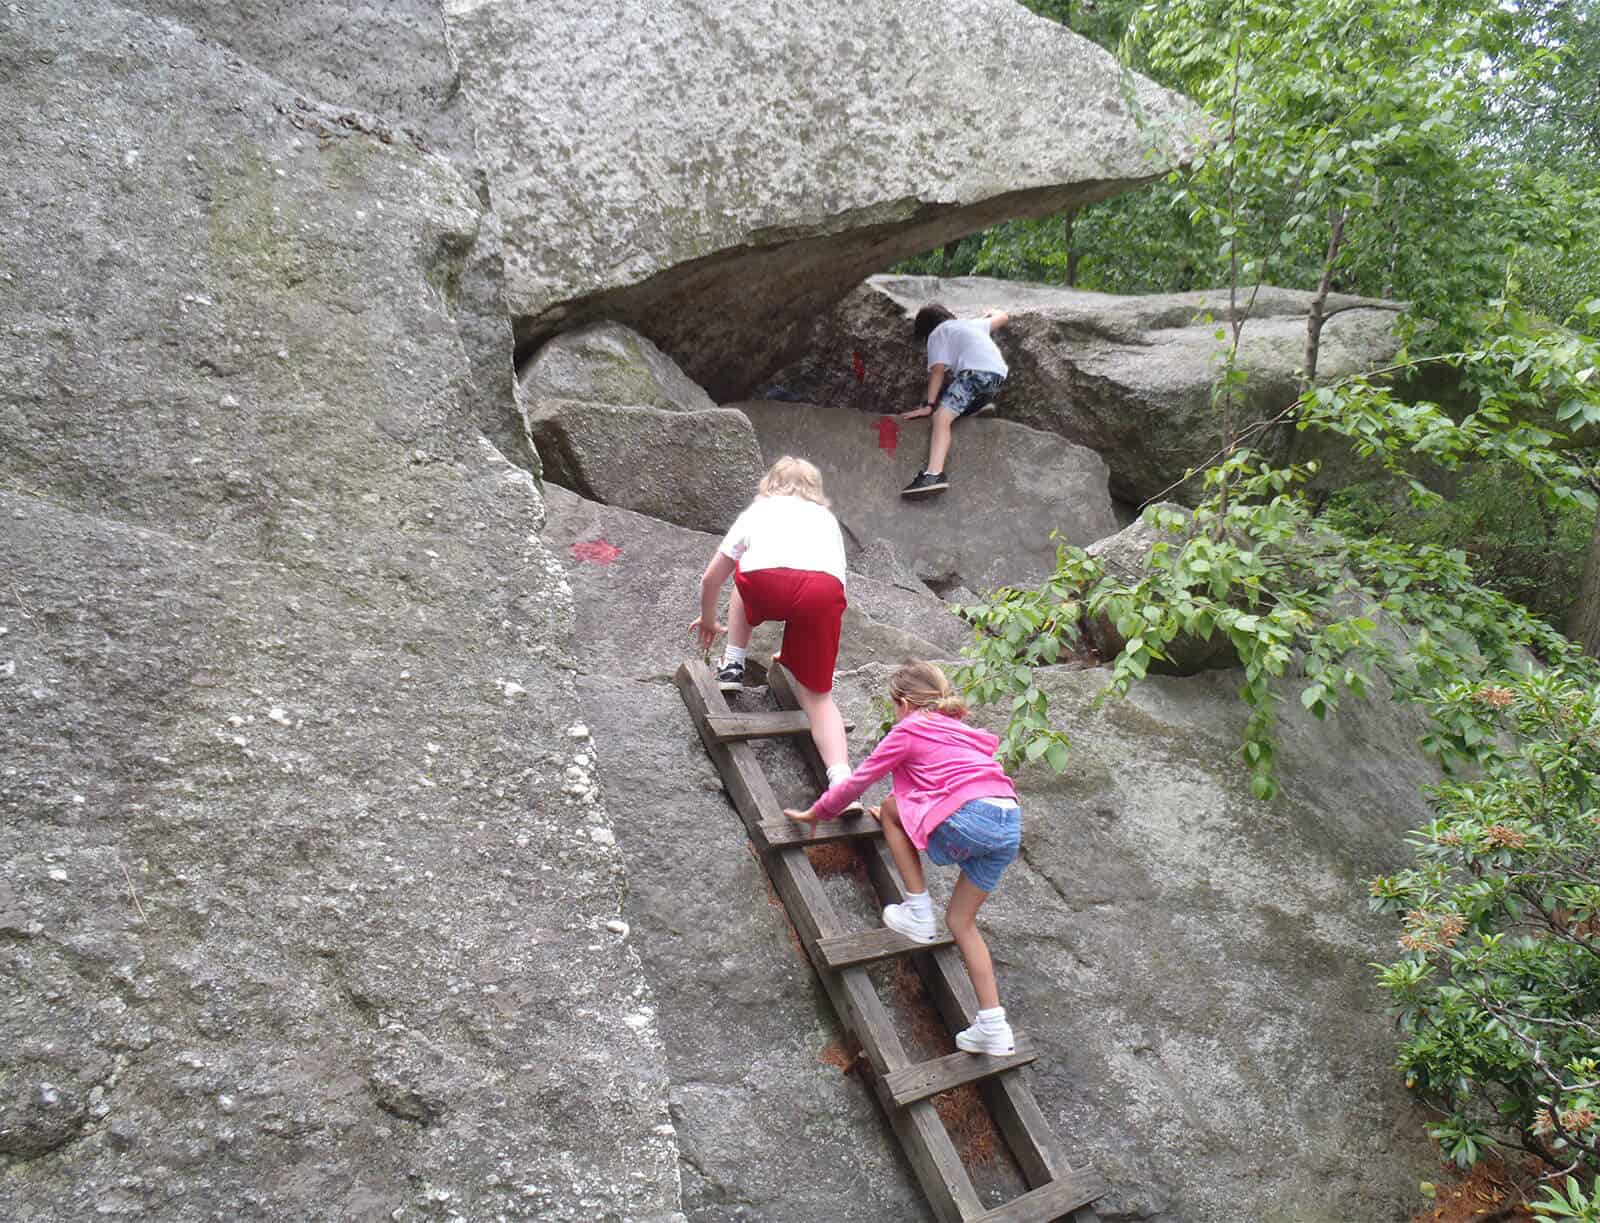 Kids climbing the rock scramble